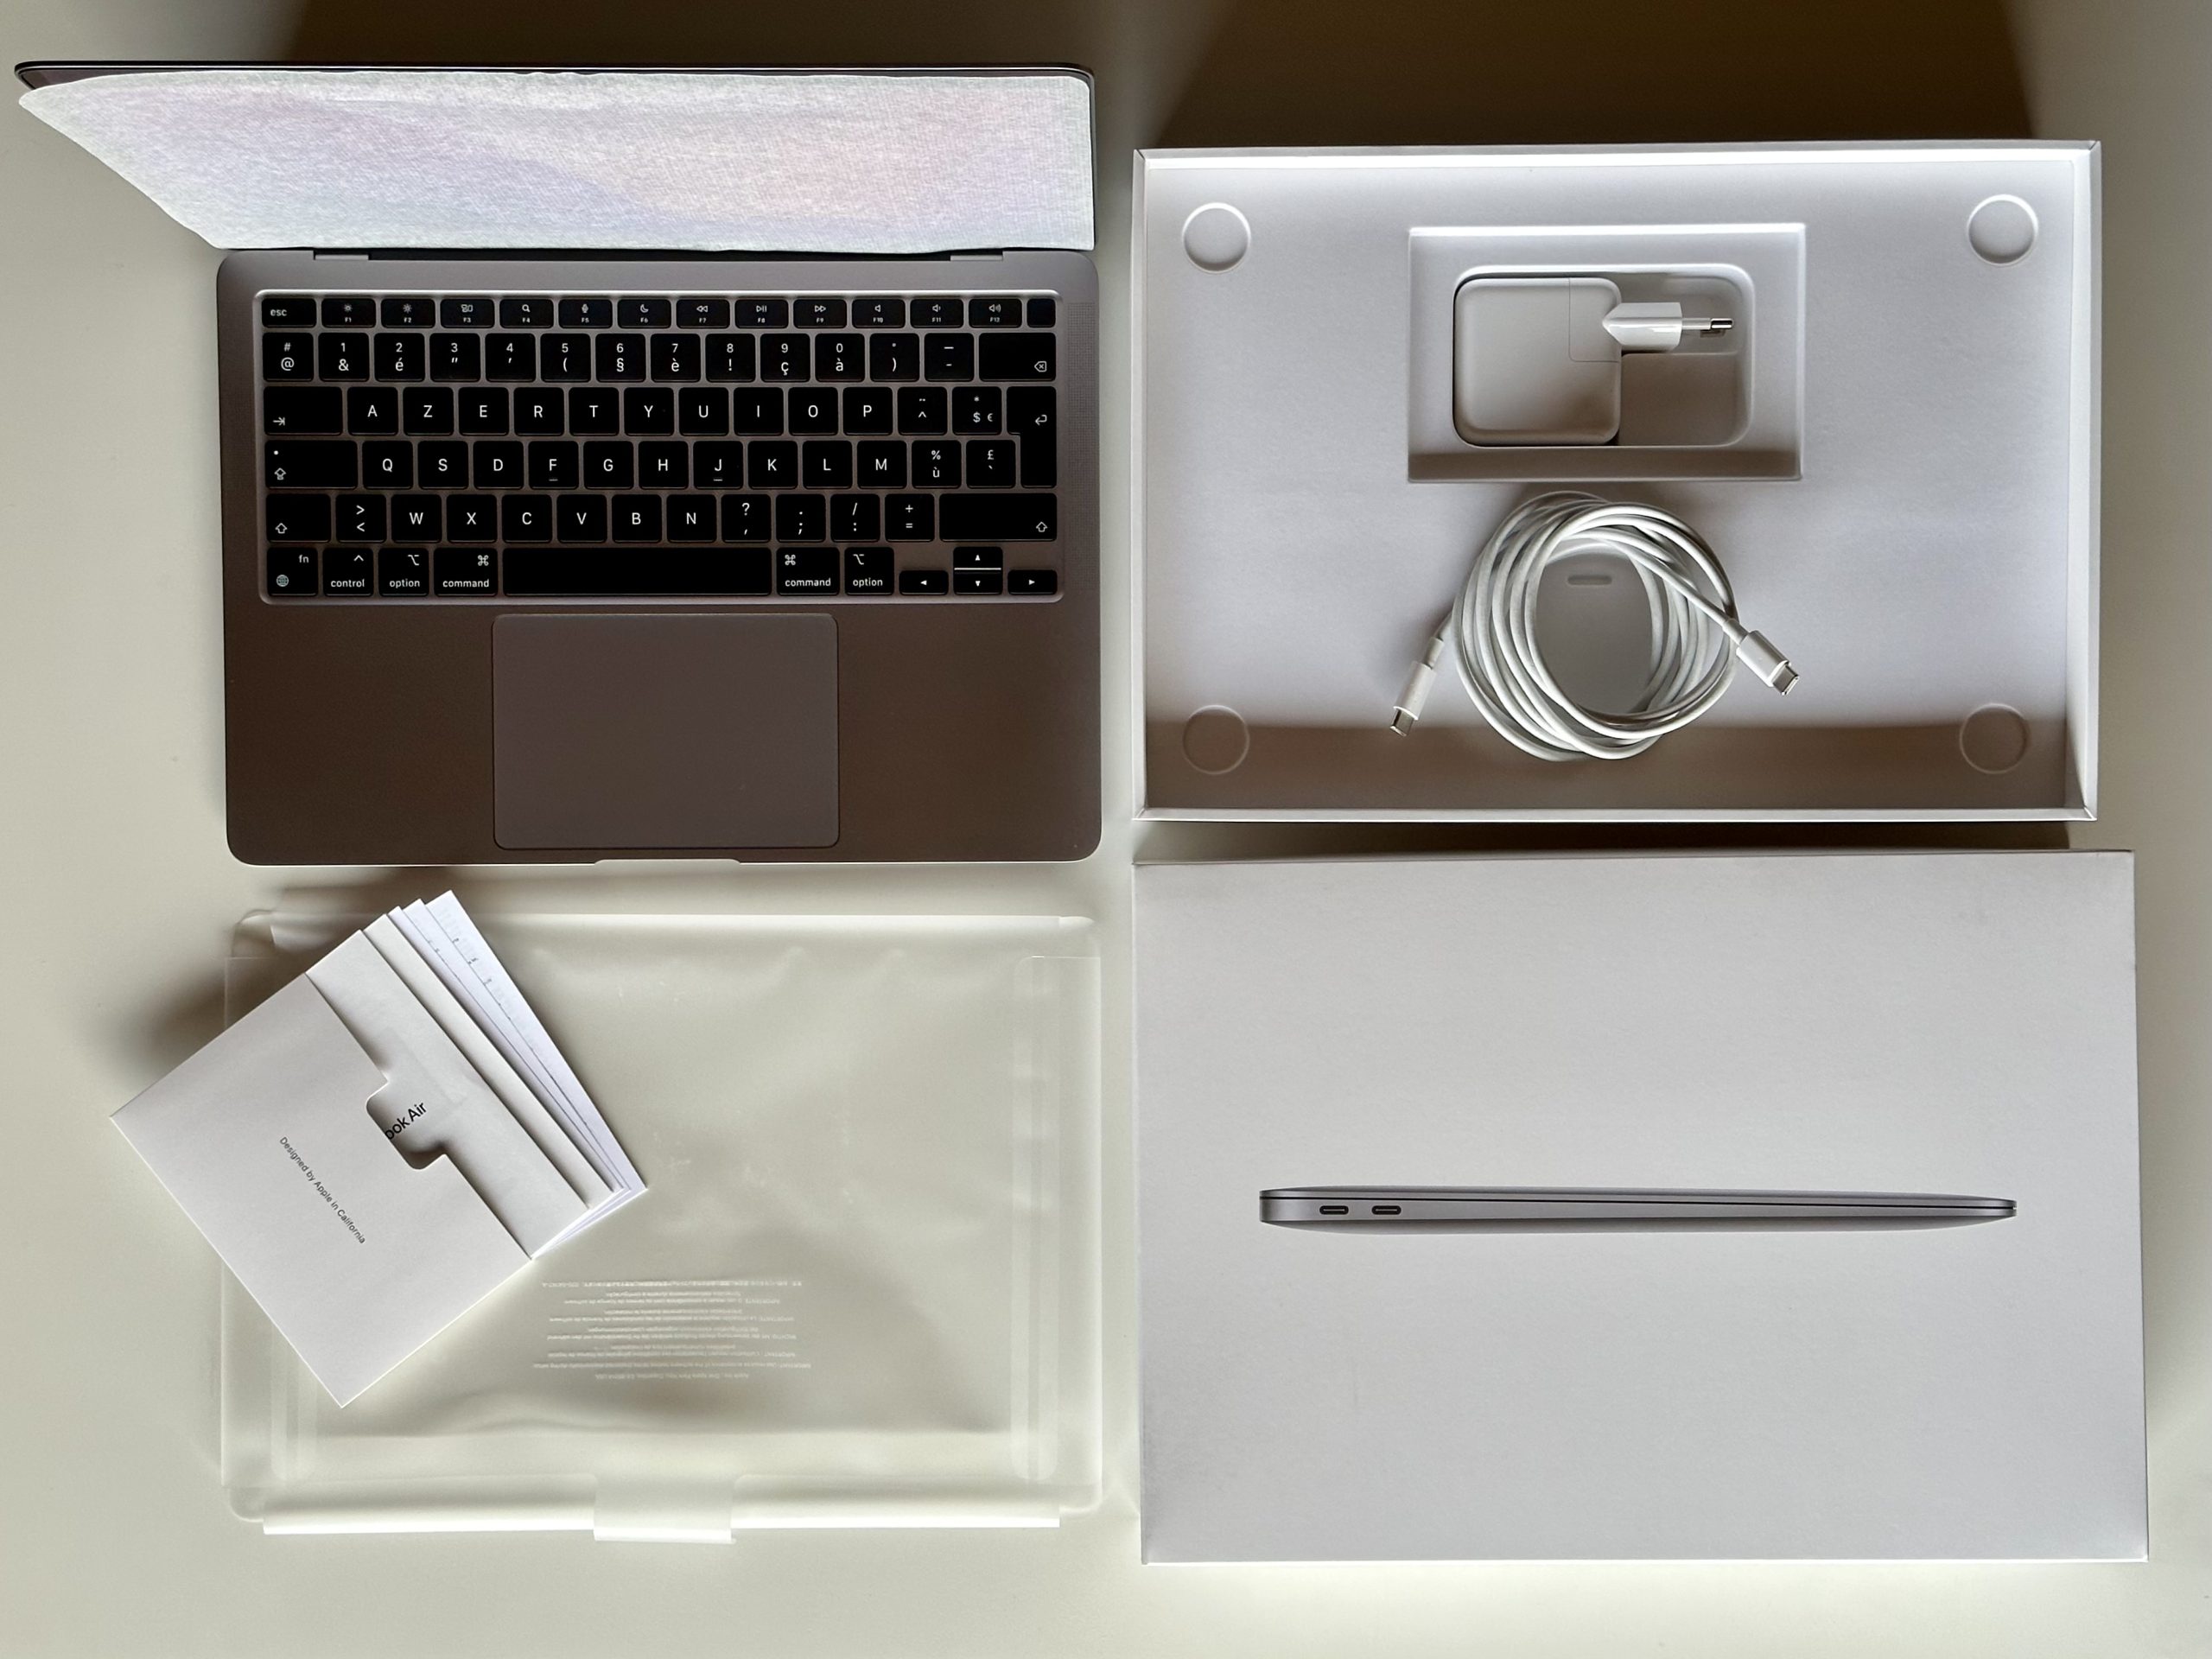 MacBook Air M1, 16Go RAM, 256Go SSD, 2020